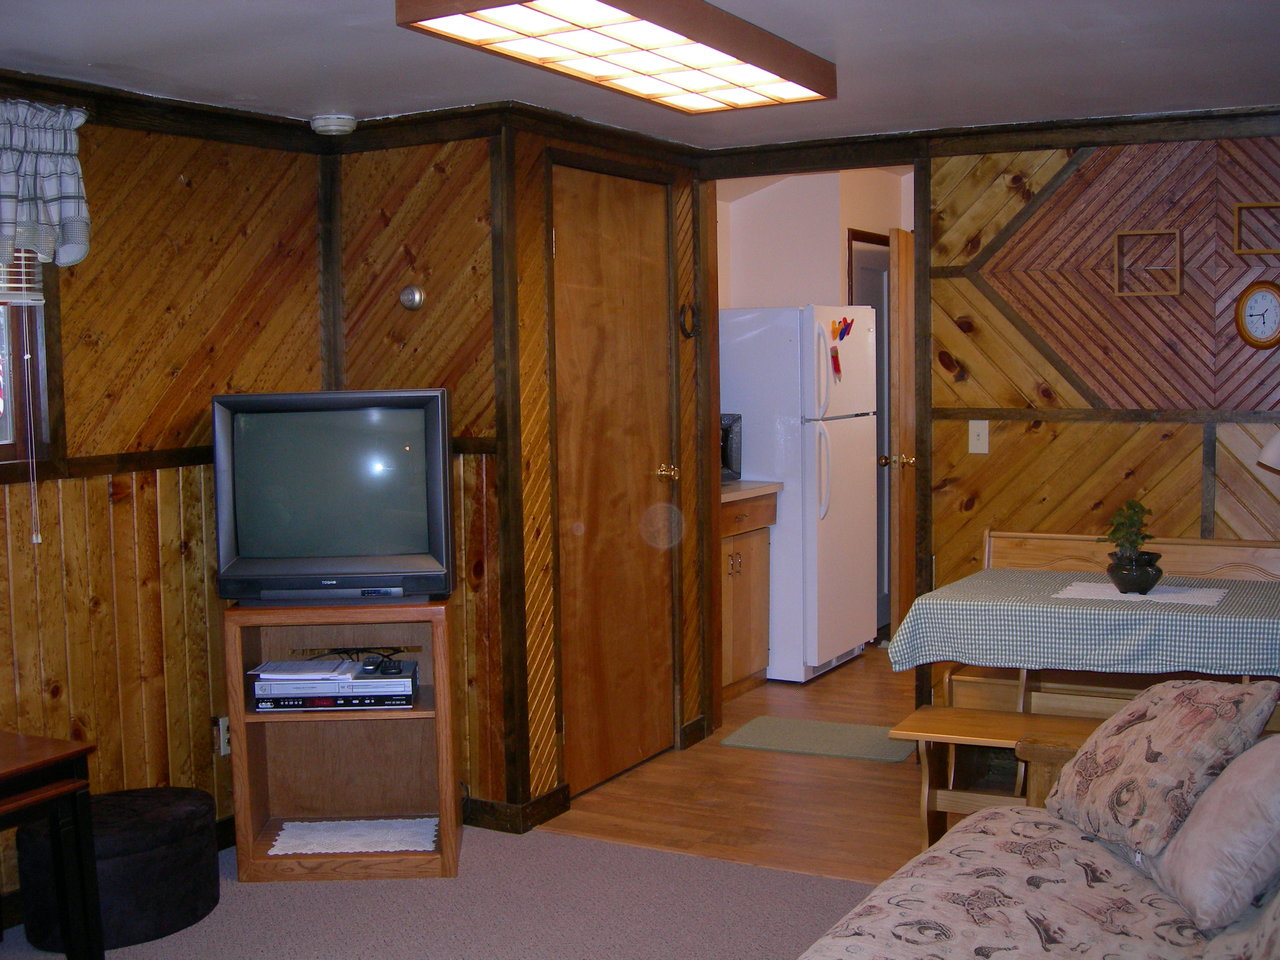 Glacier cabin dining area with TV.